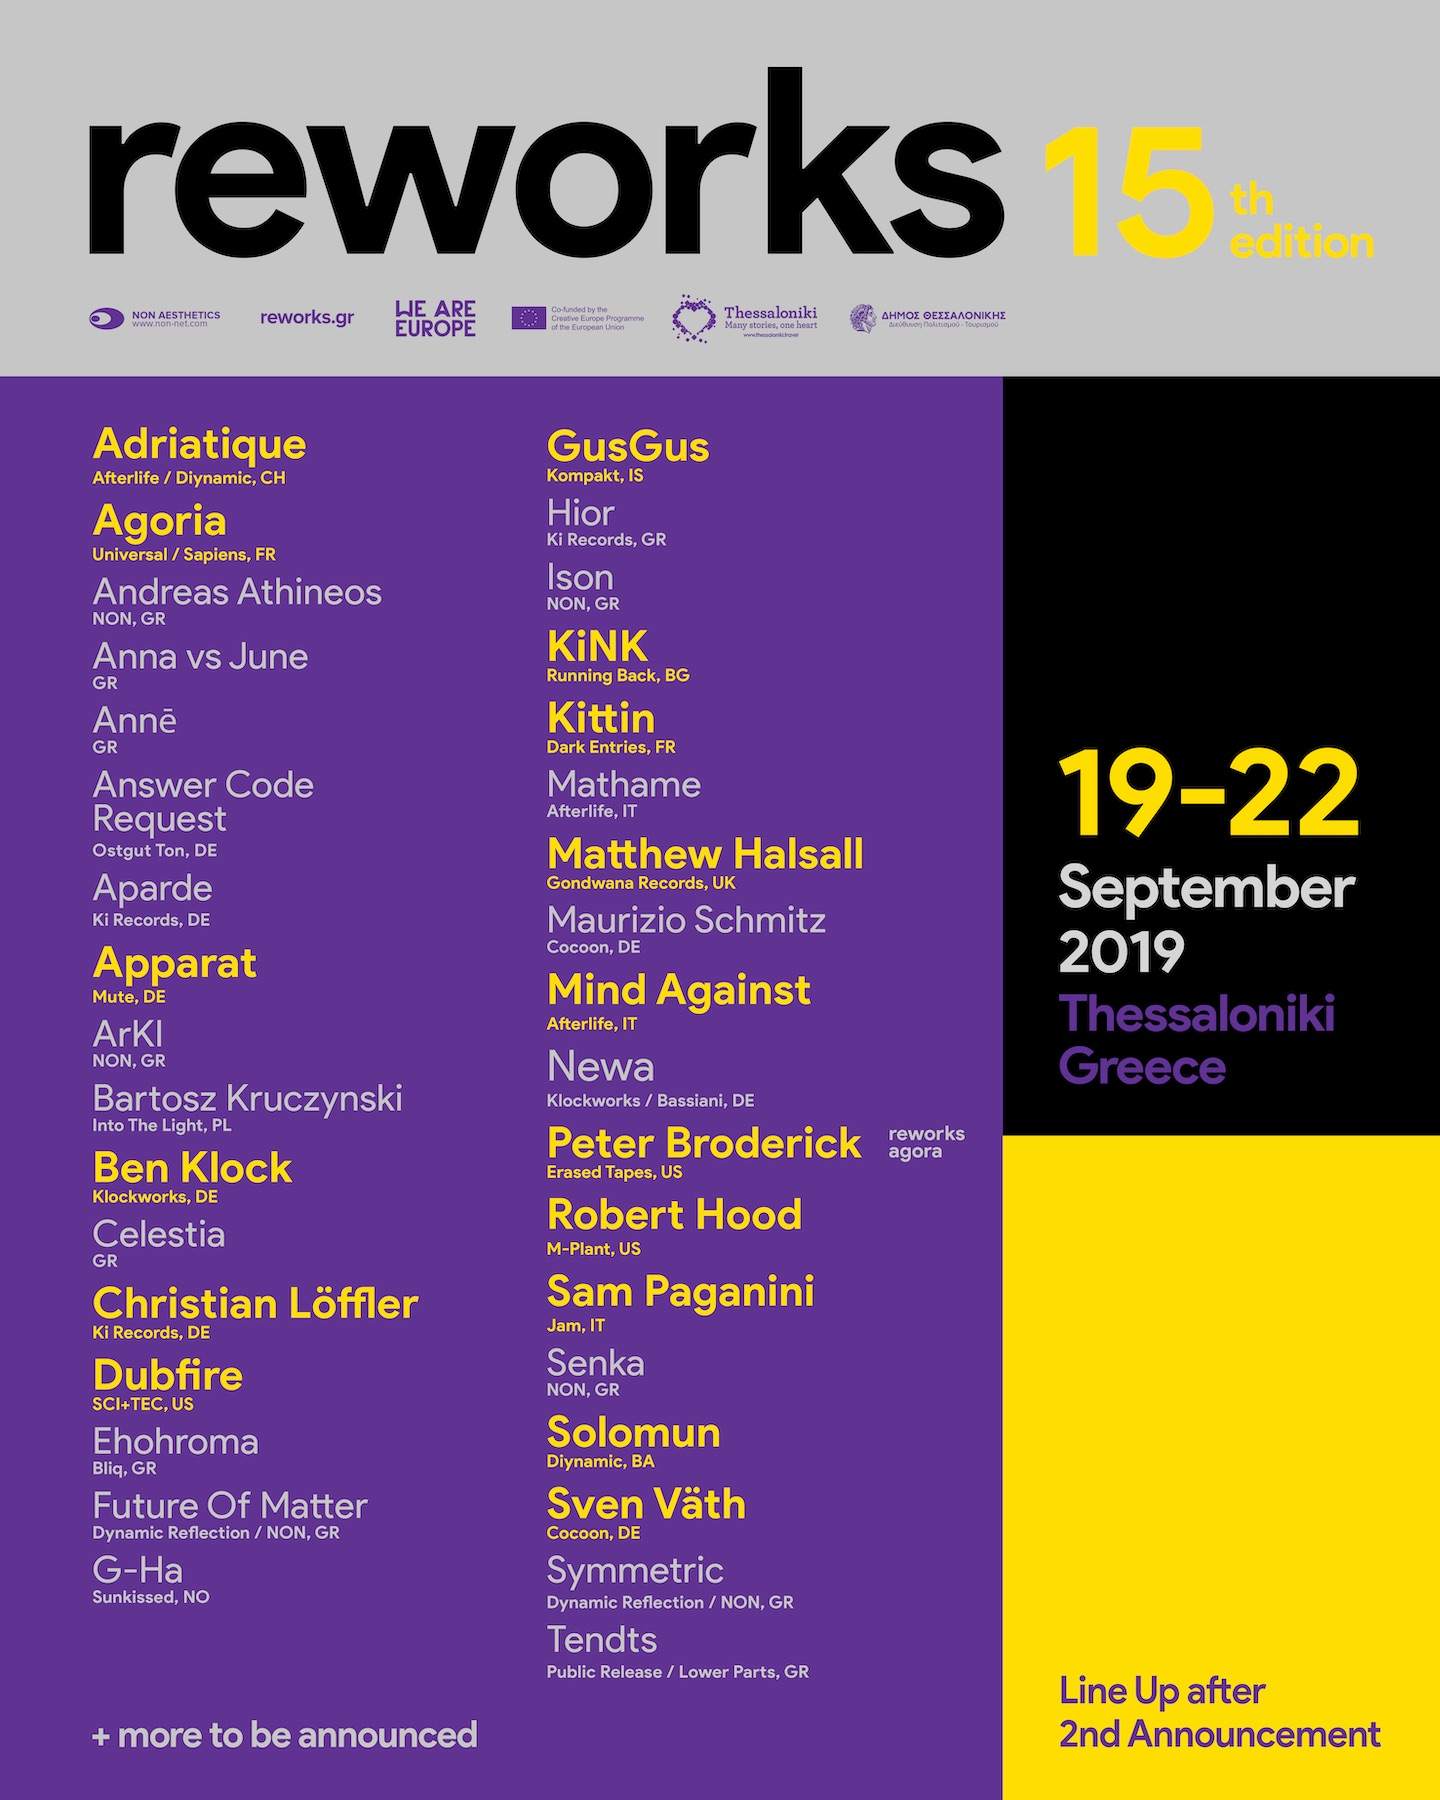 Reworks Festival adds Robert Hood for 2019 image